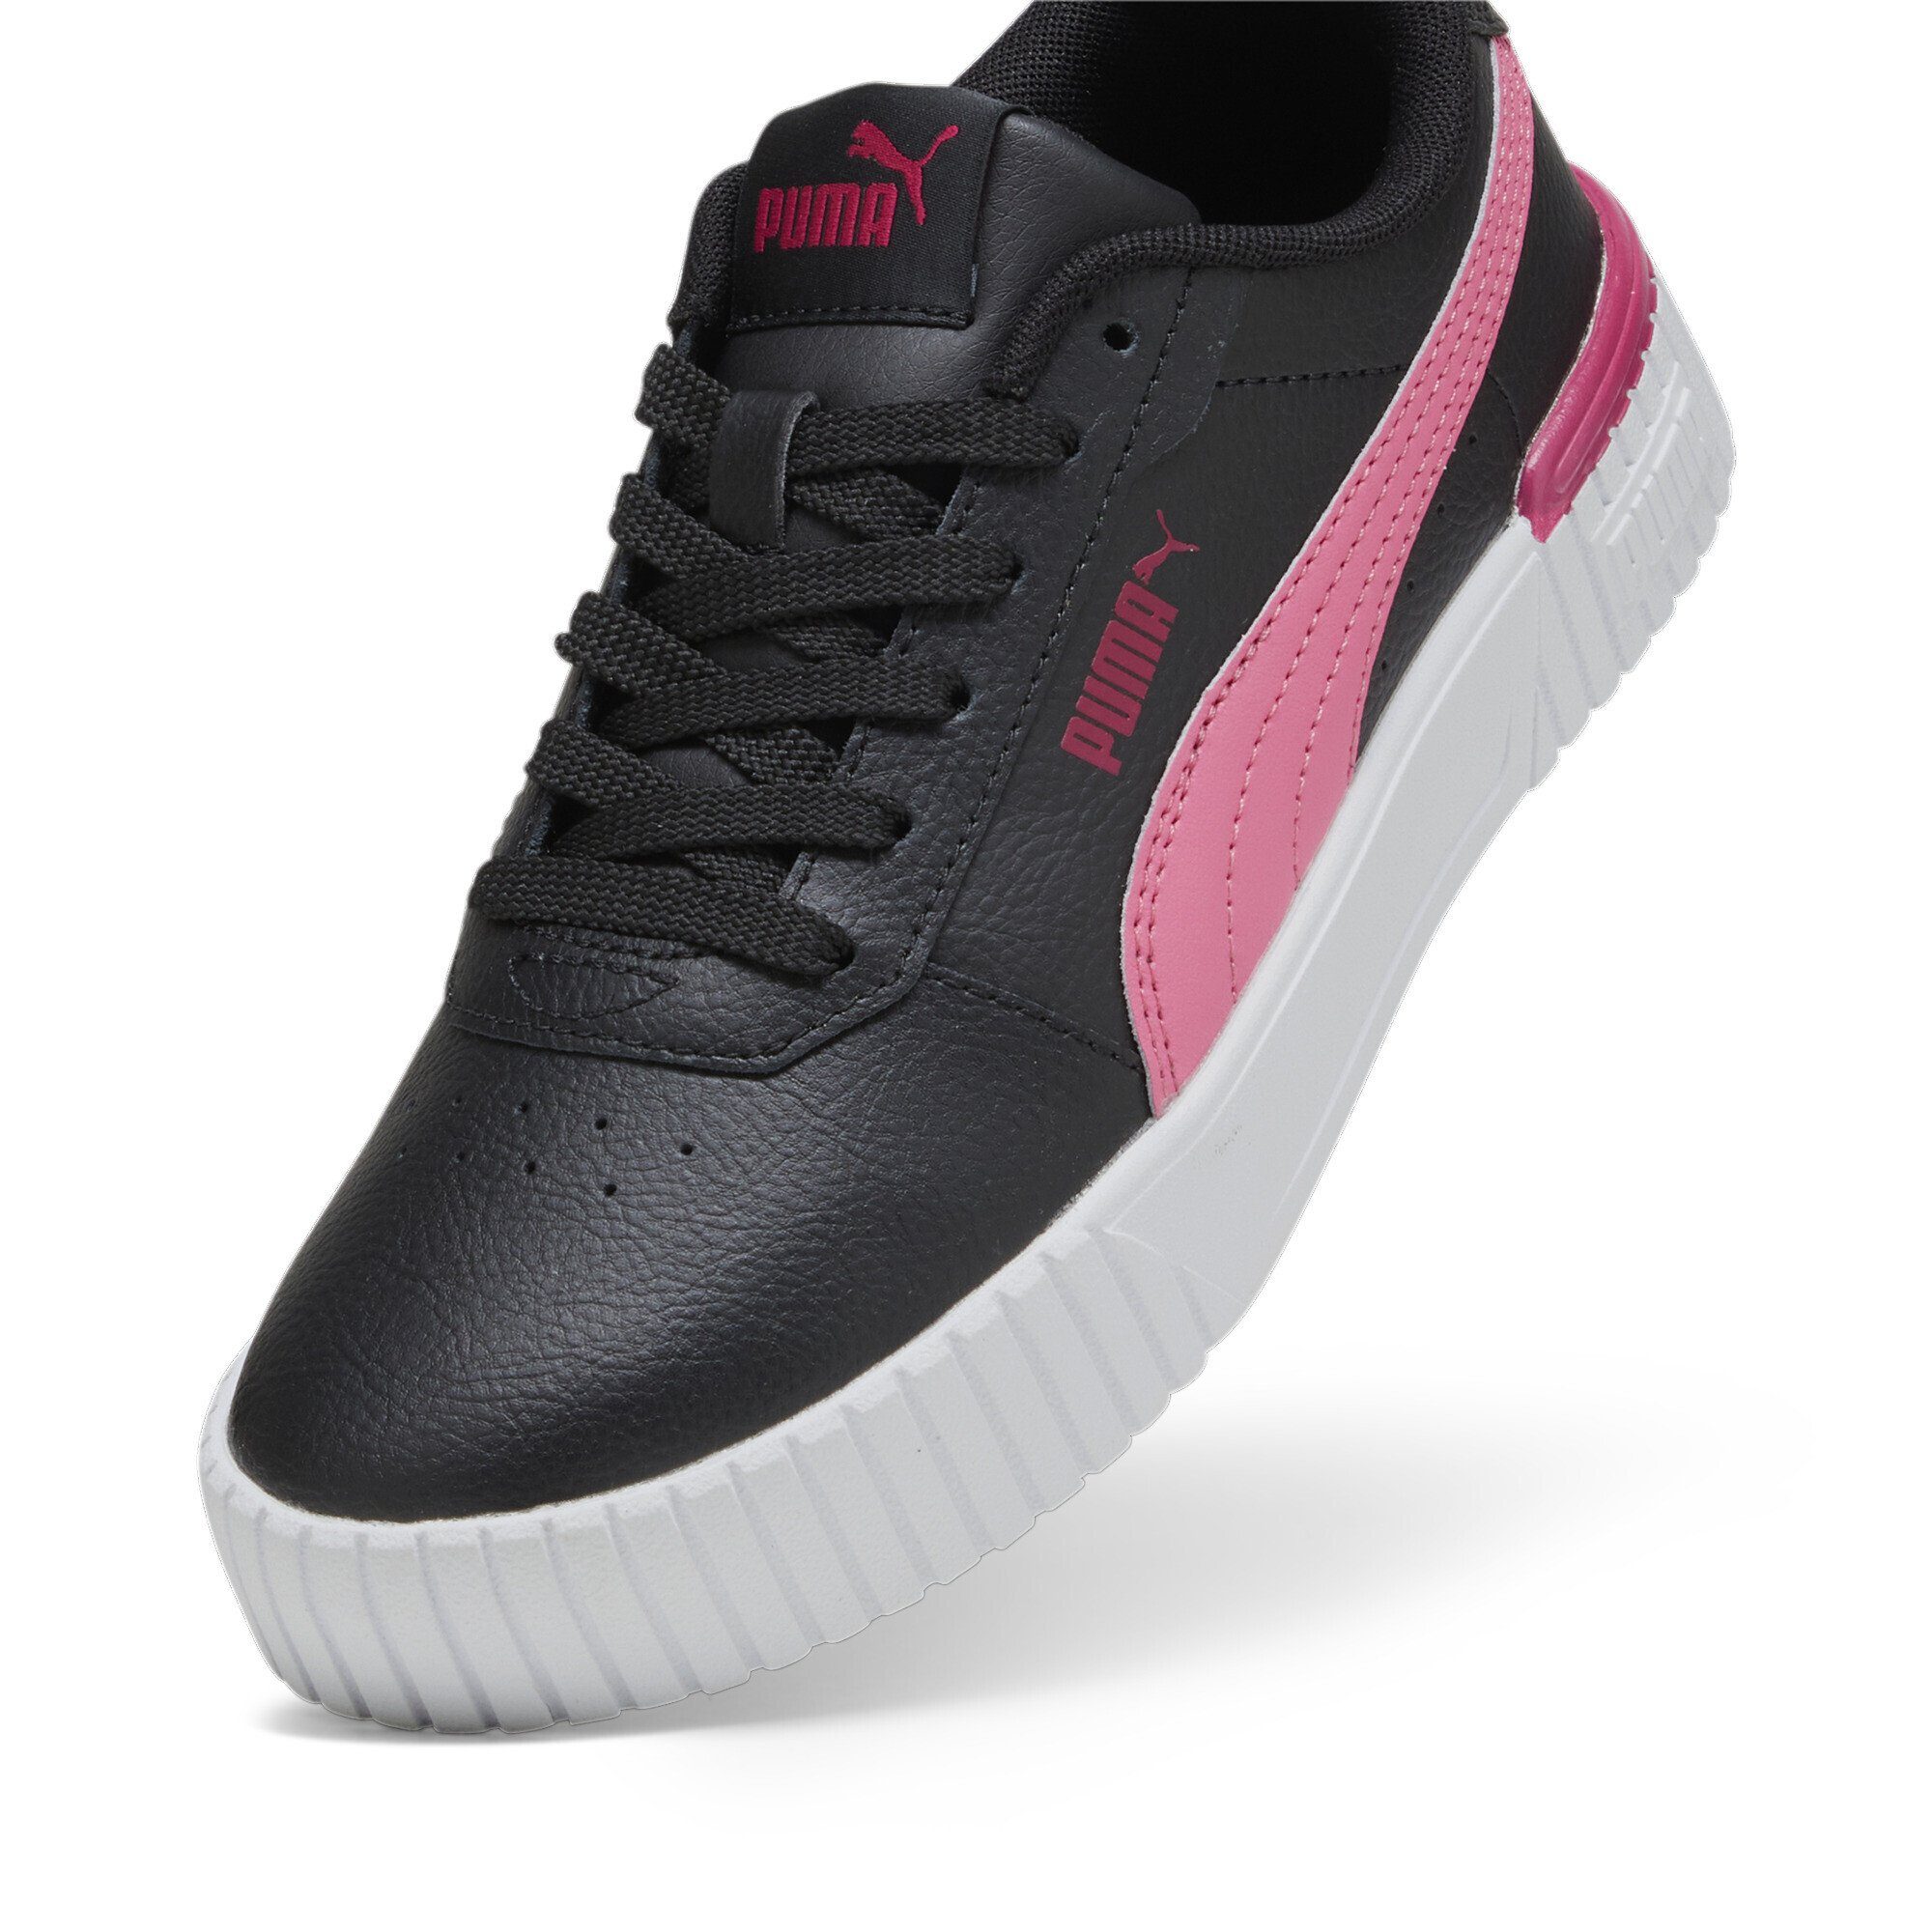 Jugendliche Carina 2.0 Black White Sneakers Burst Sneaker Pink Strawberry PUMA Pinktastic